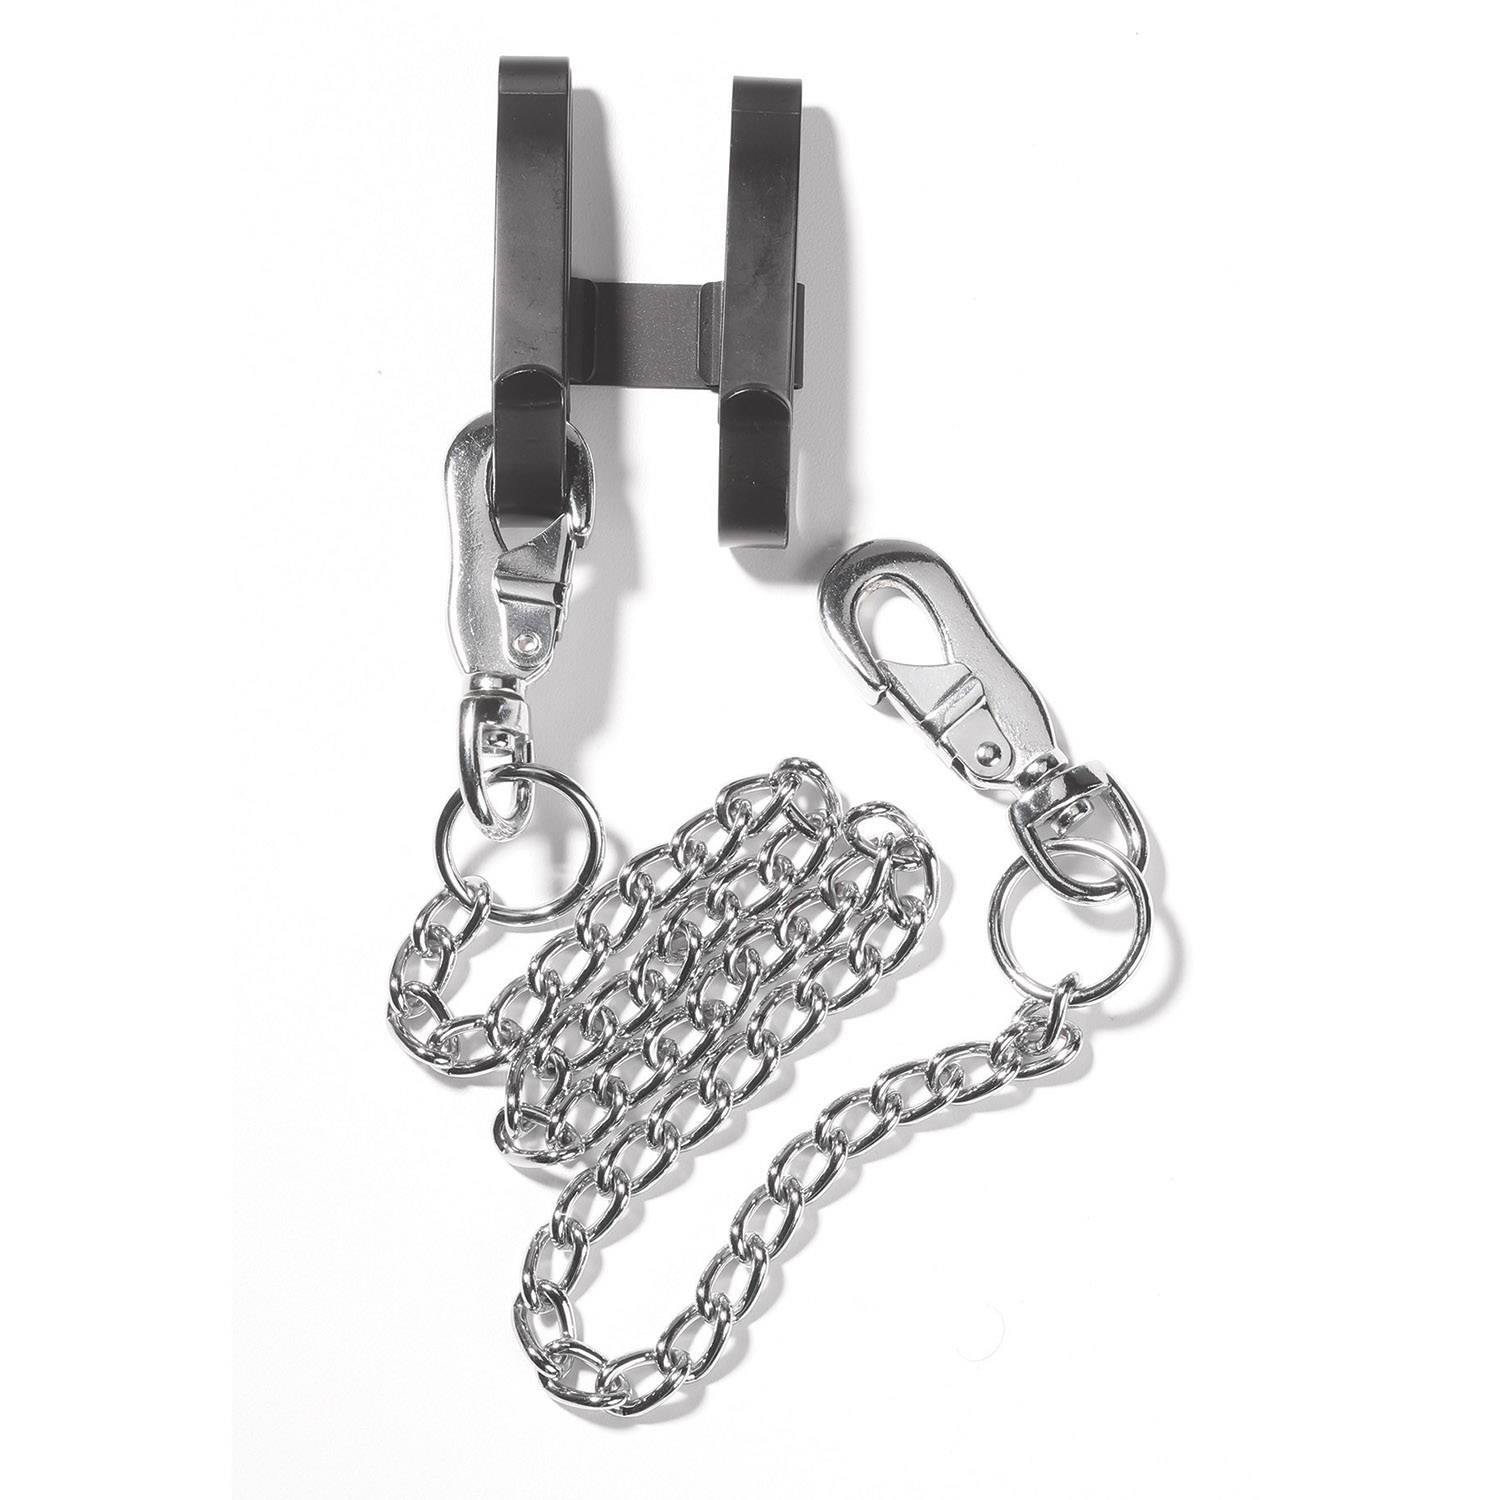 Zak Tool Key Corrections Chain and Belt Loop Combo